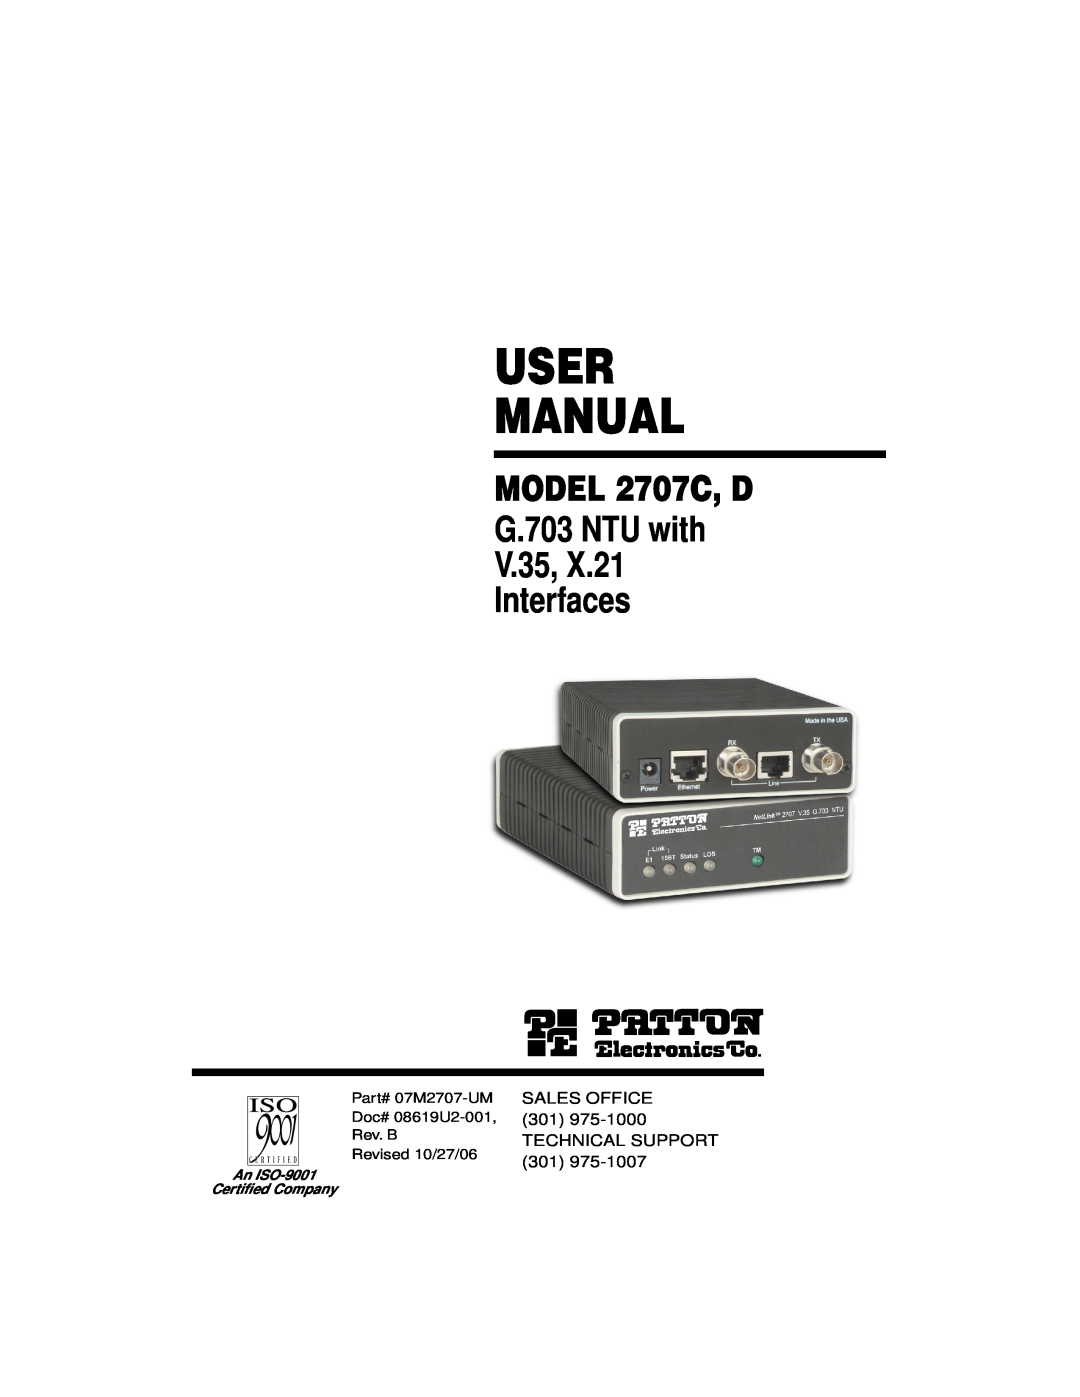 Patton electronic 2707C, 2707D, X.21 Interfaces user manual User Manual, MODEL 2707C, D G.703 NTU with V.35 Interfaces 